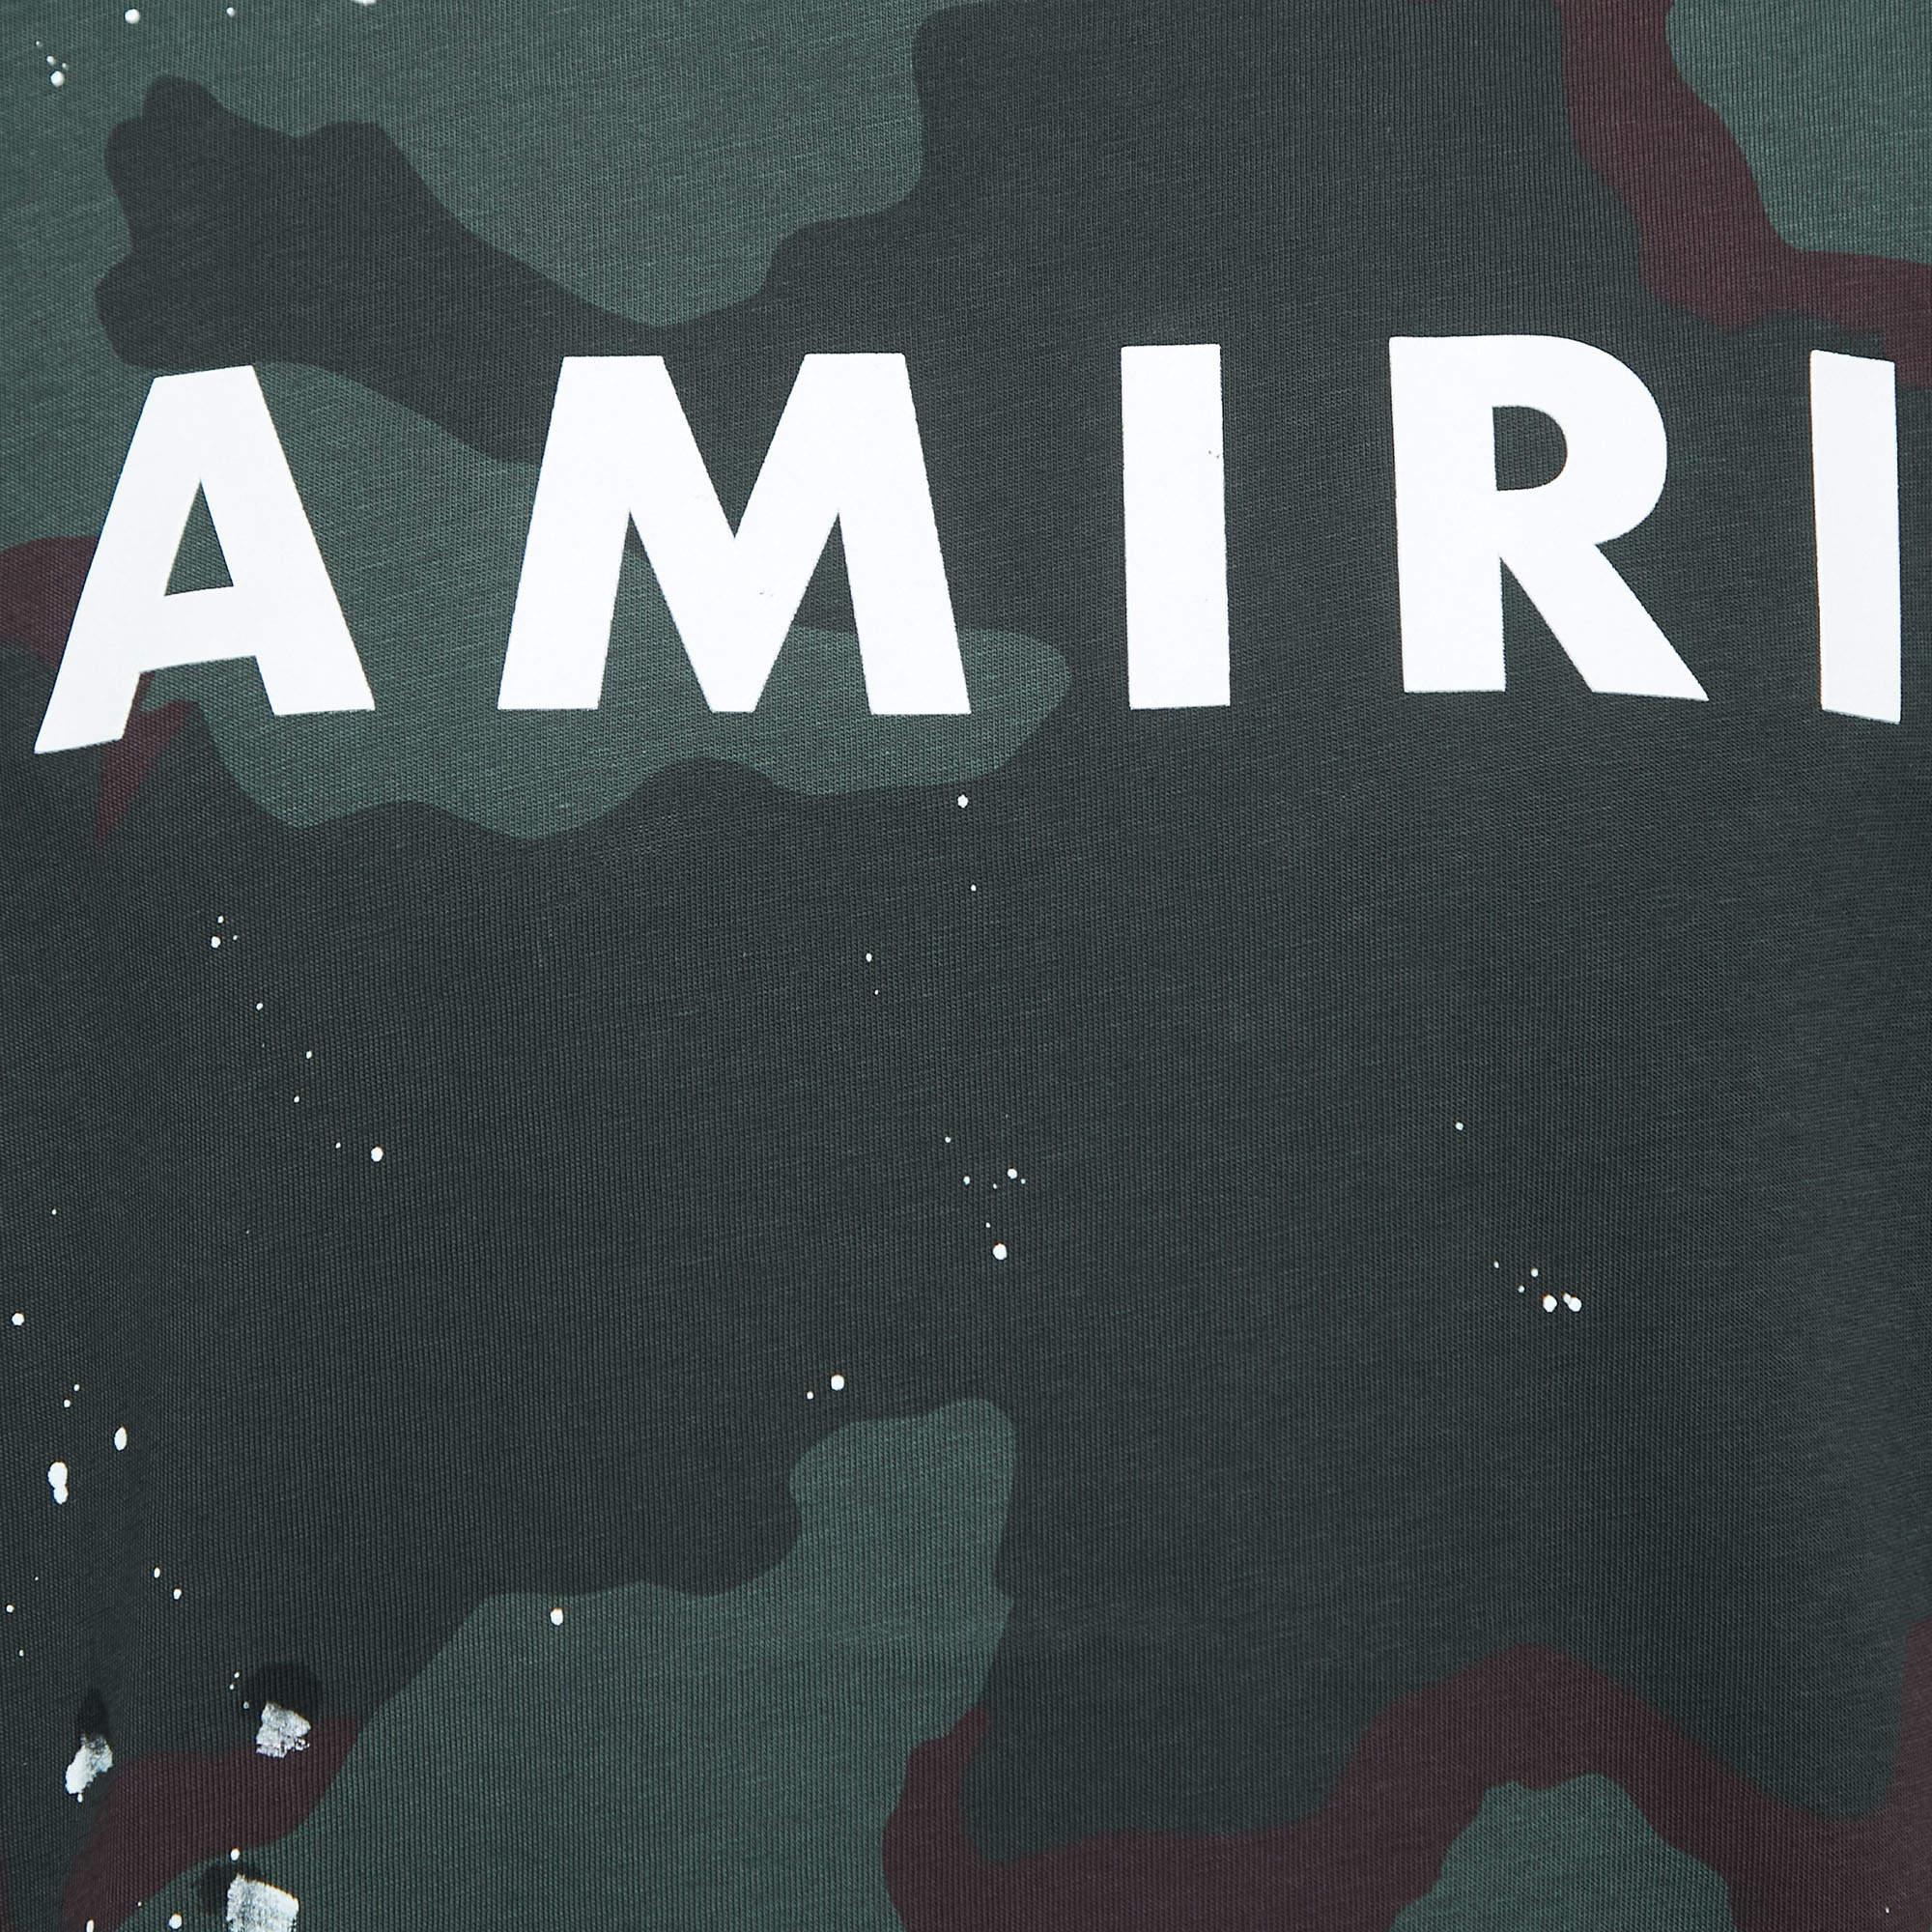 Amiri Green Camouflage Print Logo T-Shirt L For Sale 2